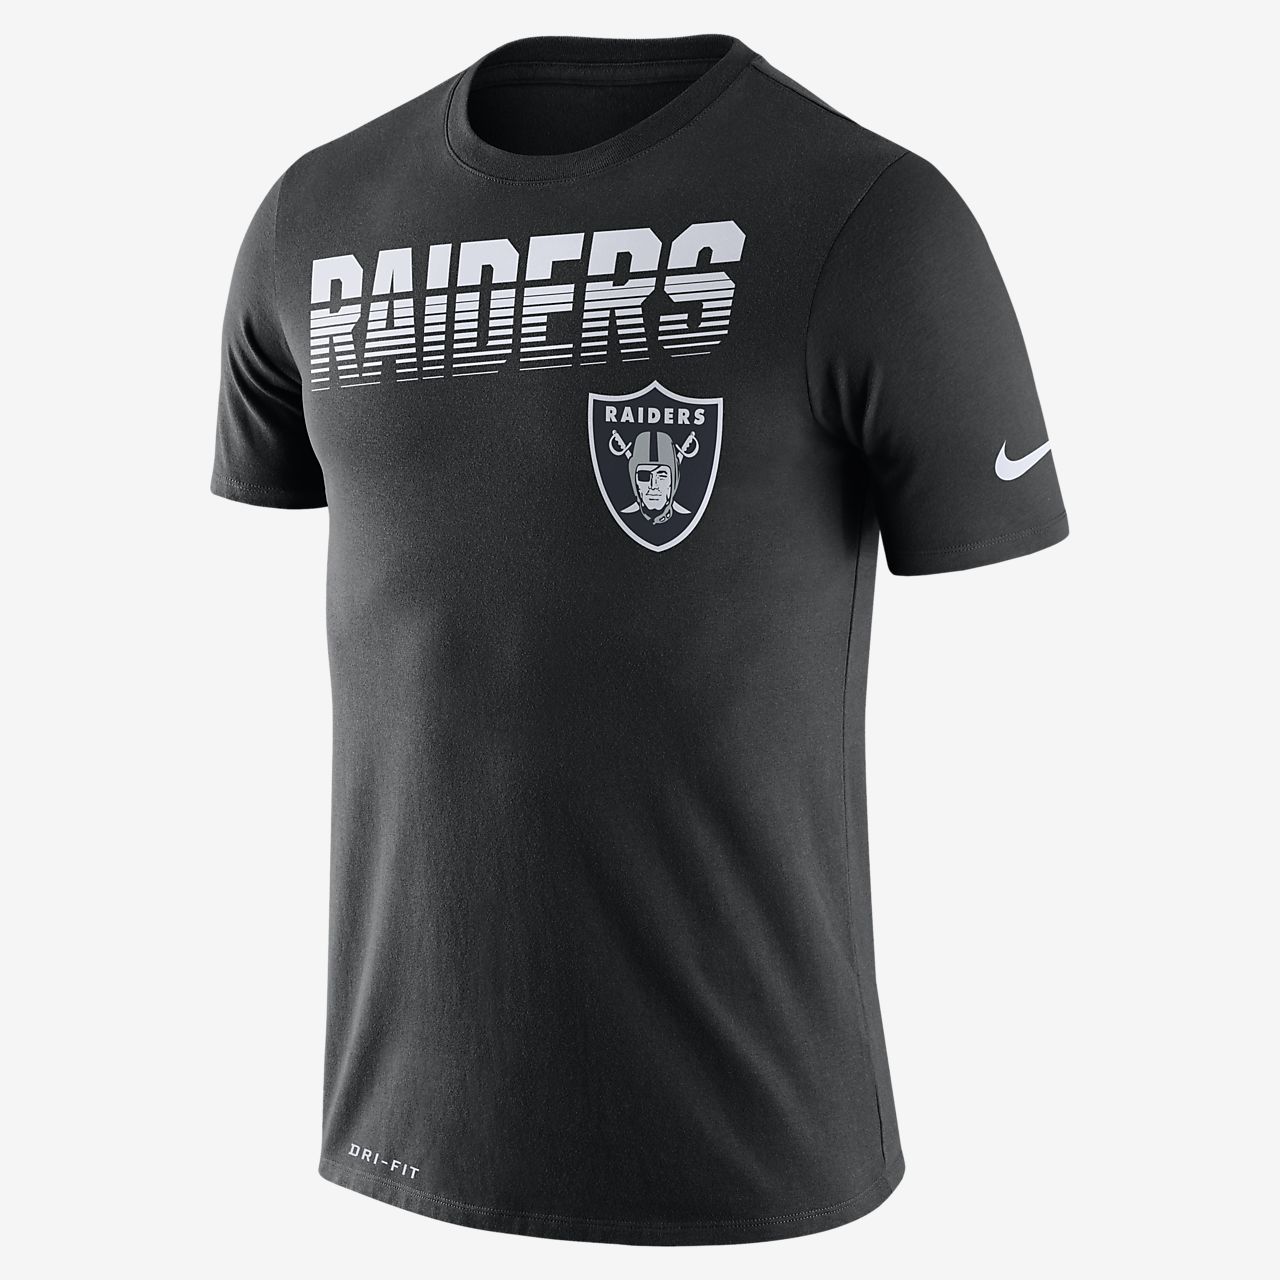 NFL Raiders) Men's Short-Sleeve T-Shirt 